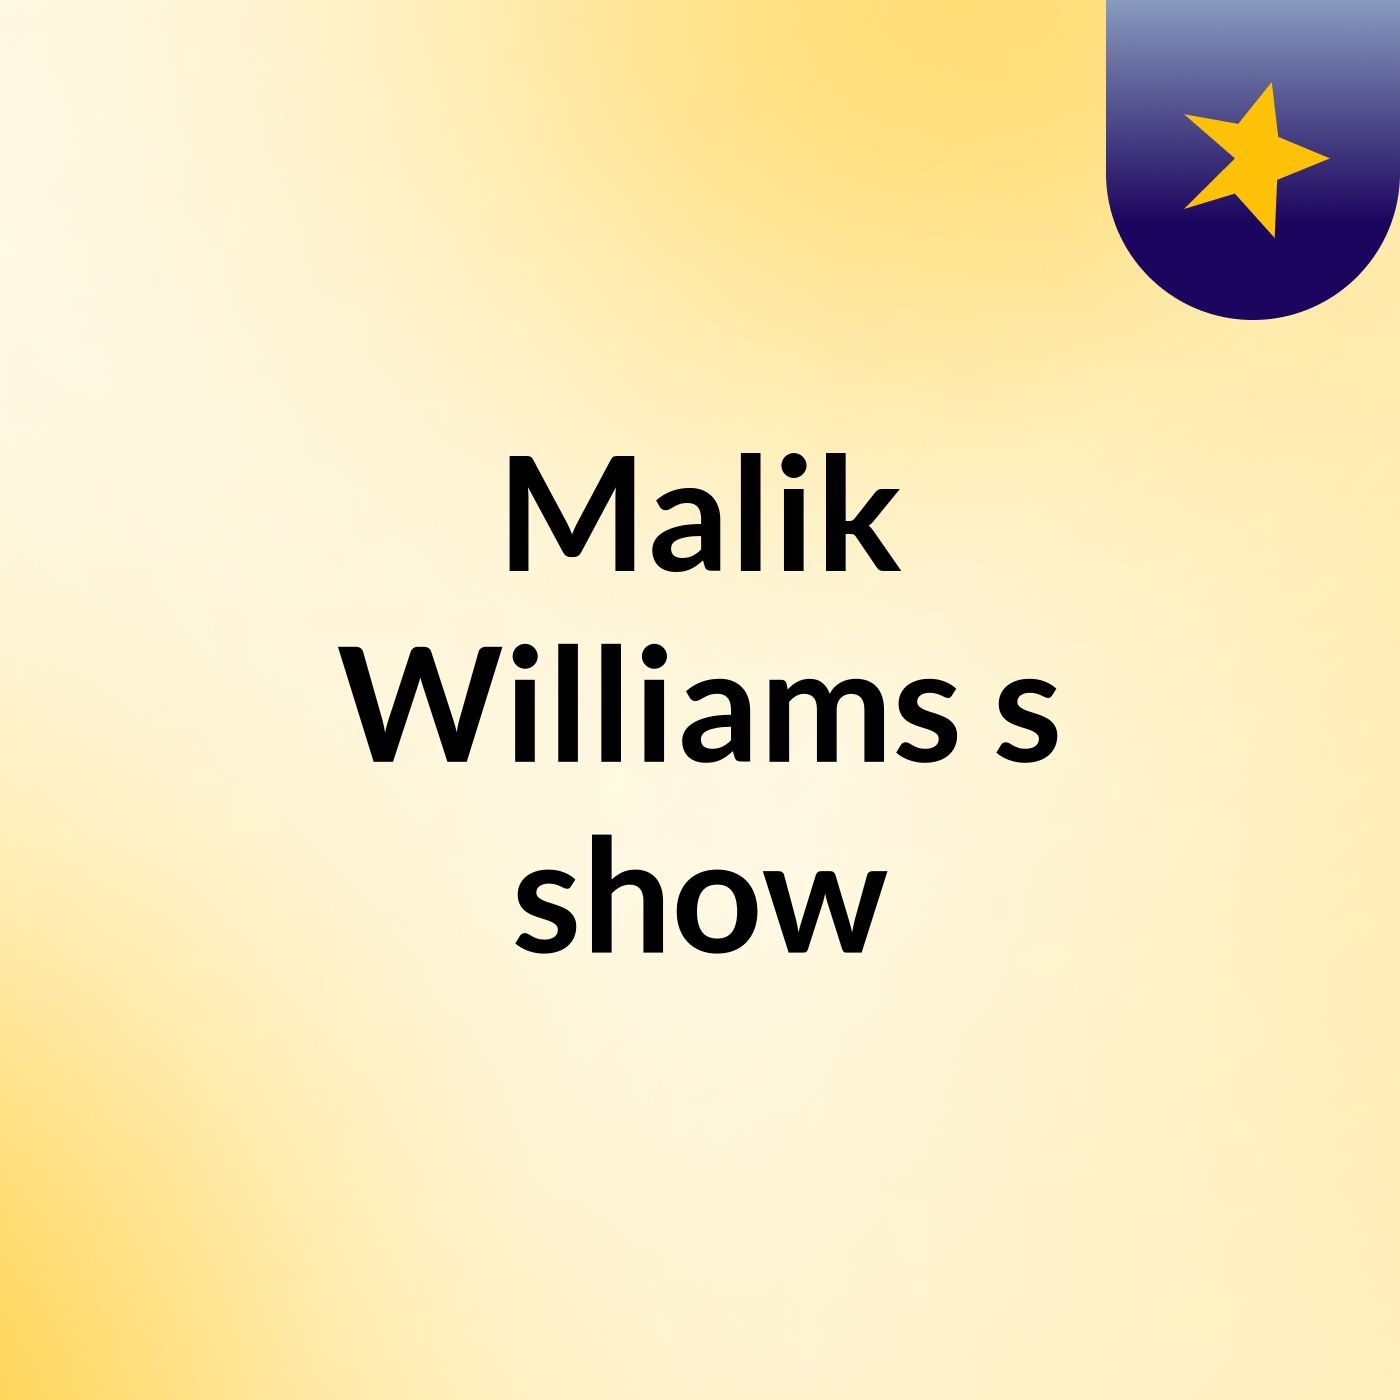 Malik Williams's show